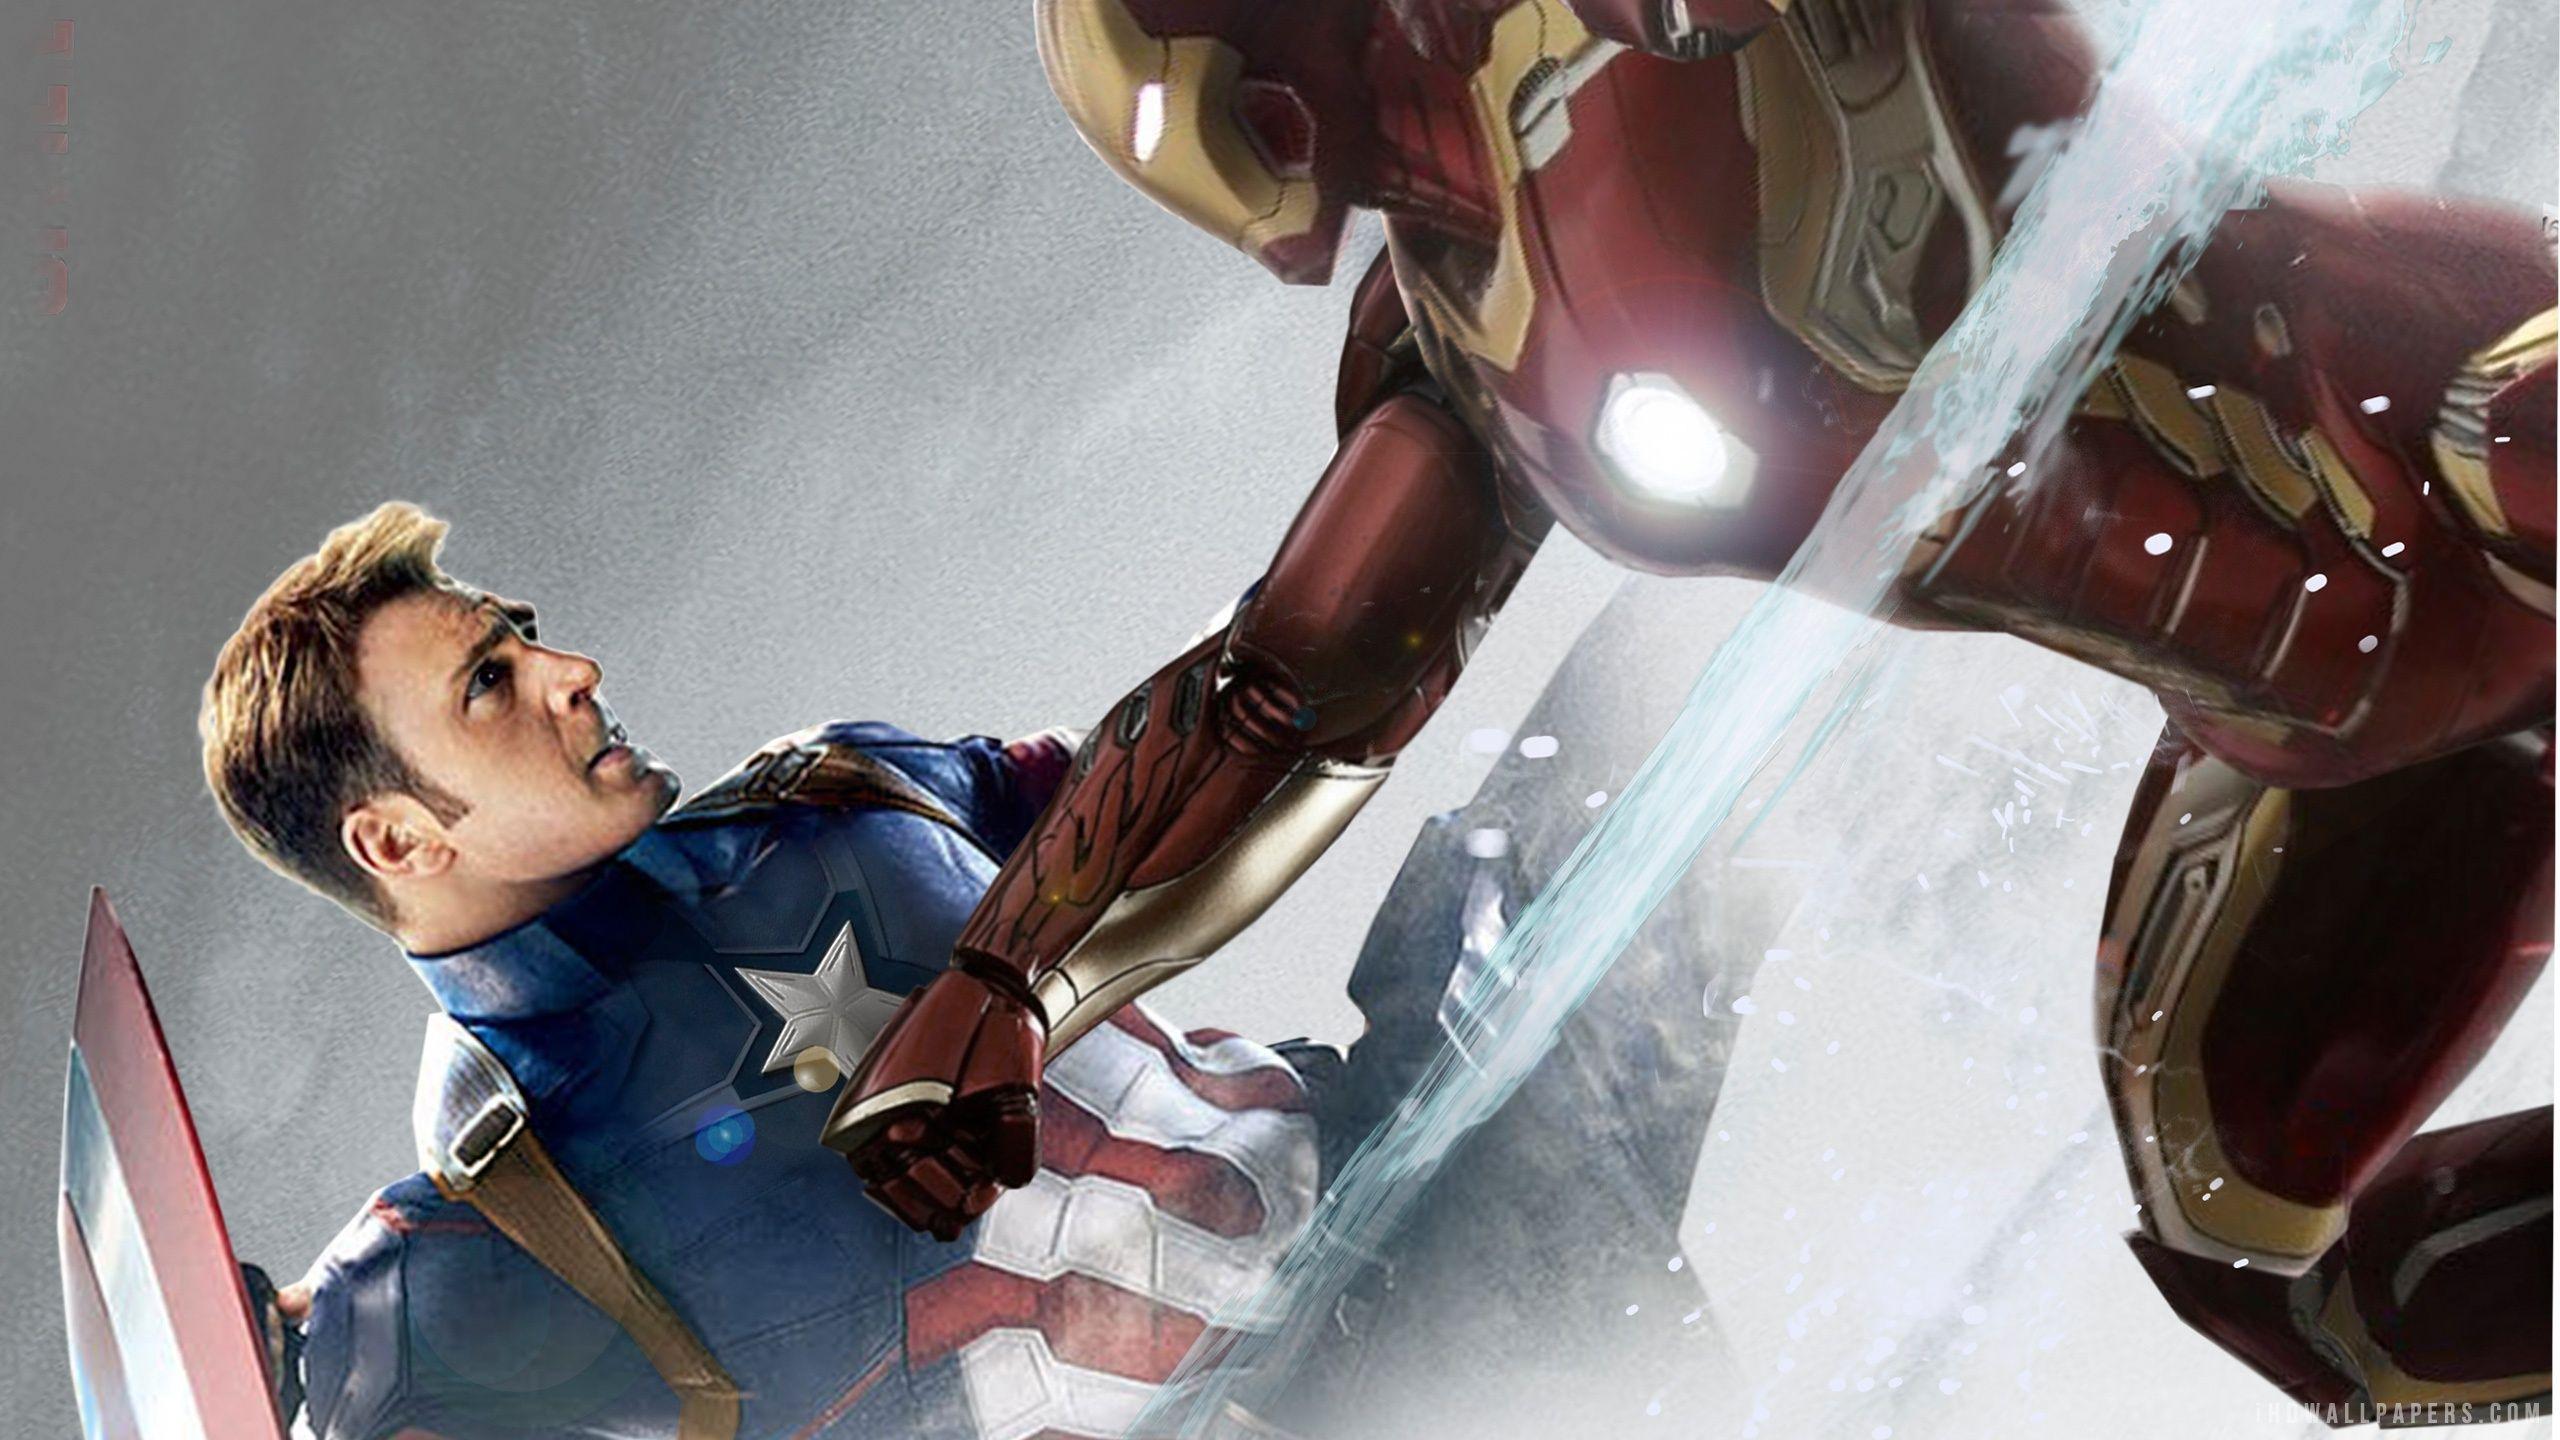 Captain America Vs Iron Man wallpaper. movies and tv series